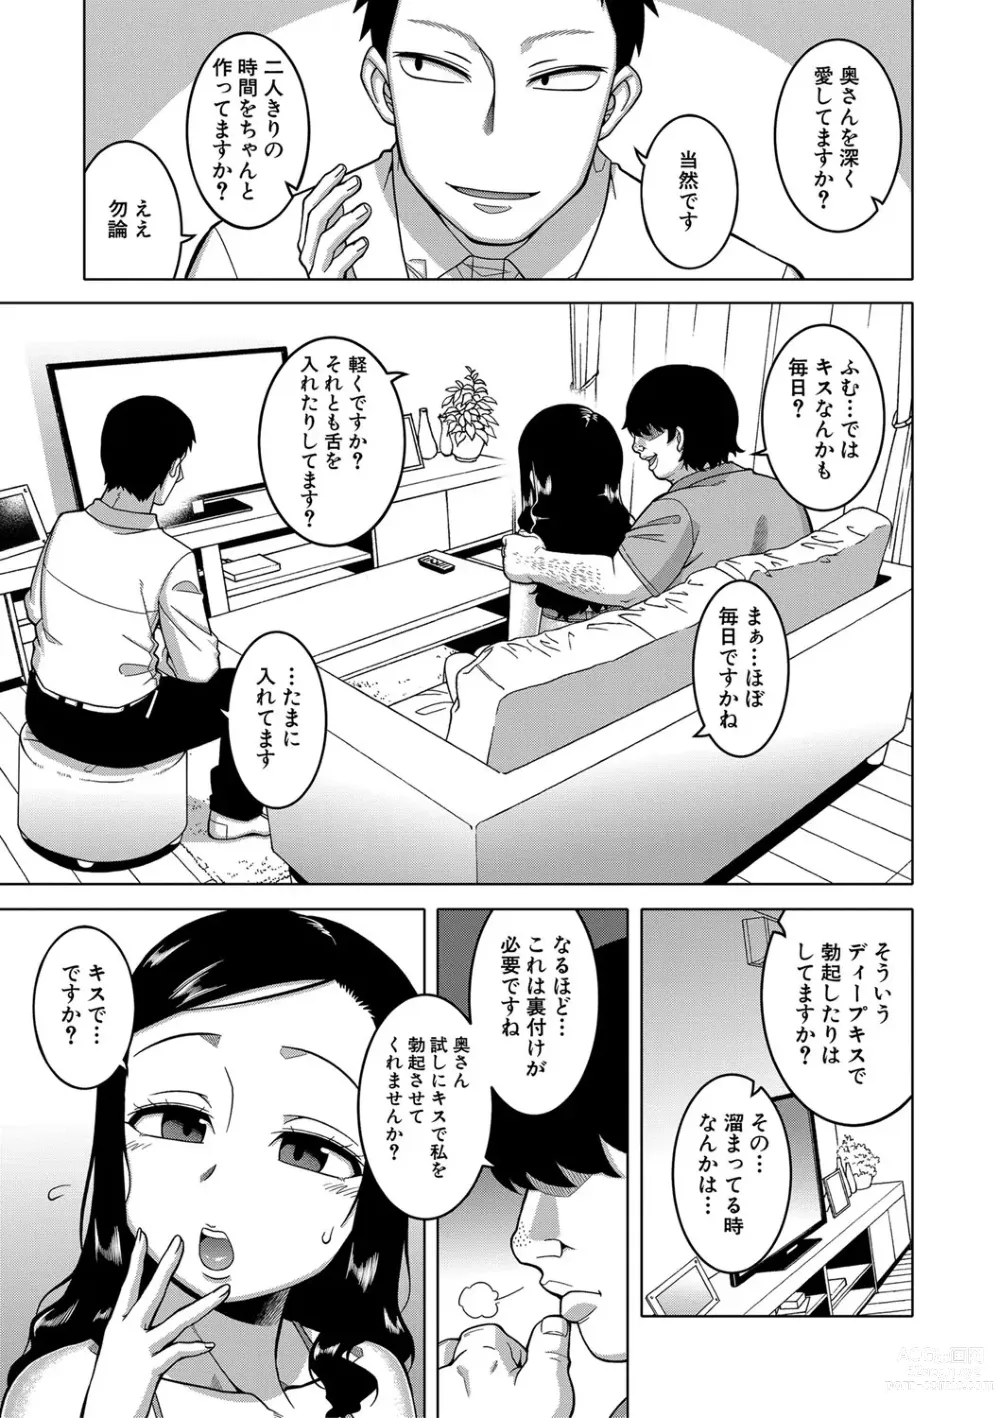 Page 18 of manga Saimin Fuufunaka Chousa - Investigate marital relationship with hypnosis